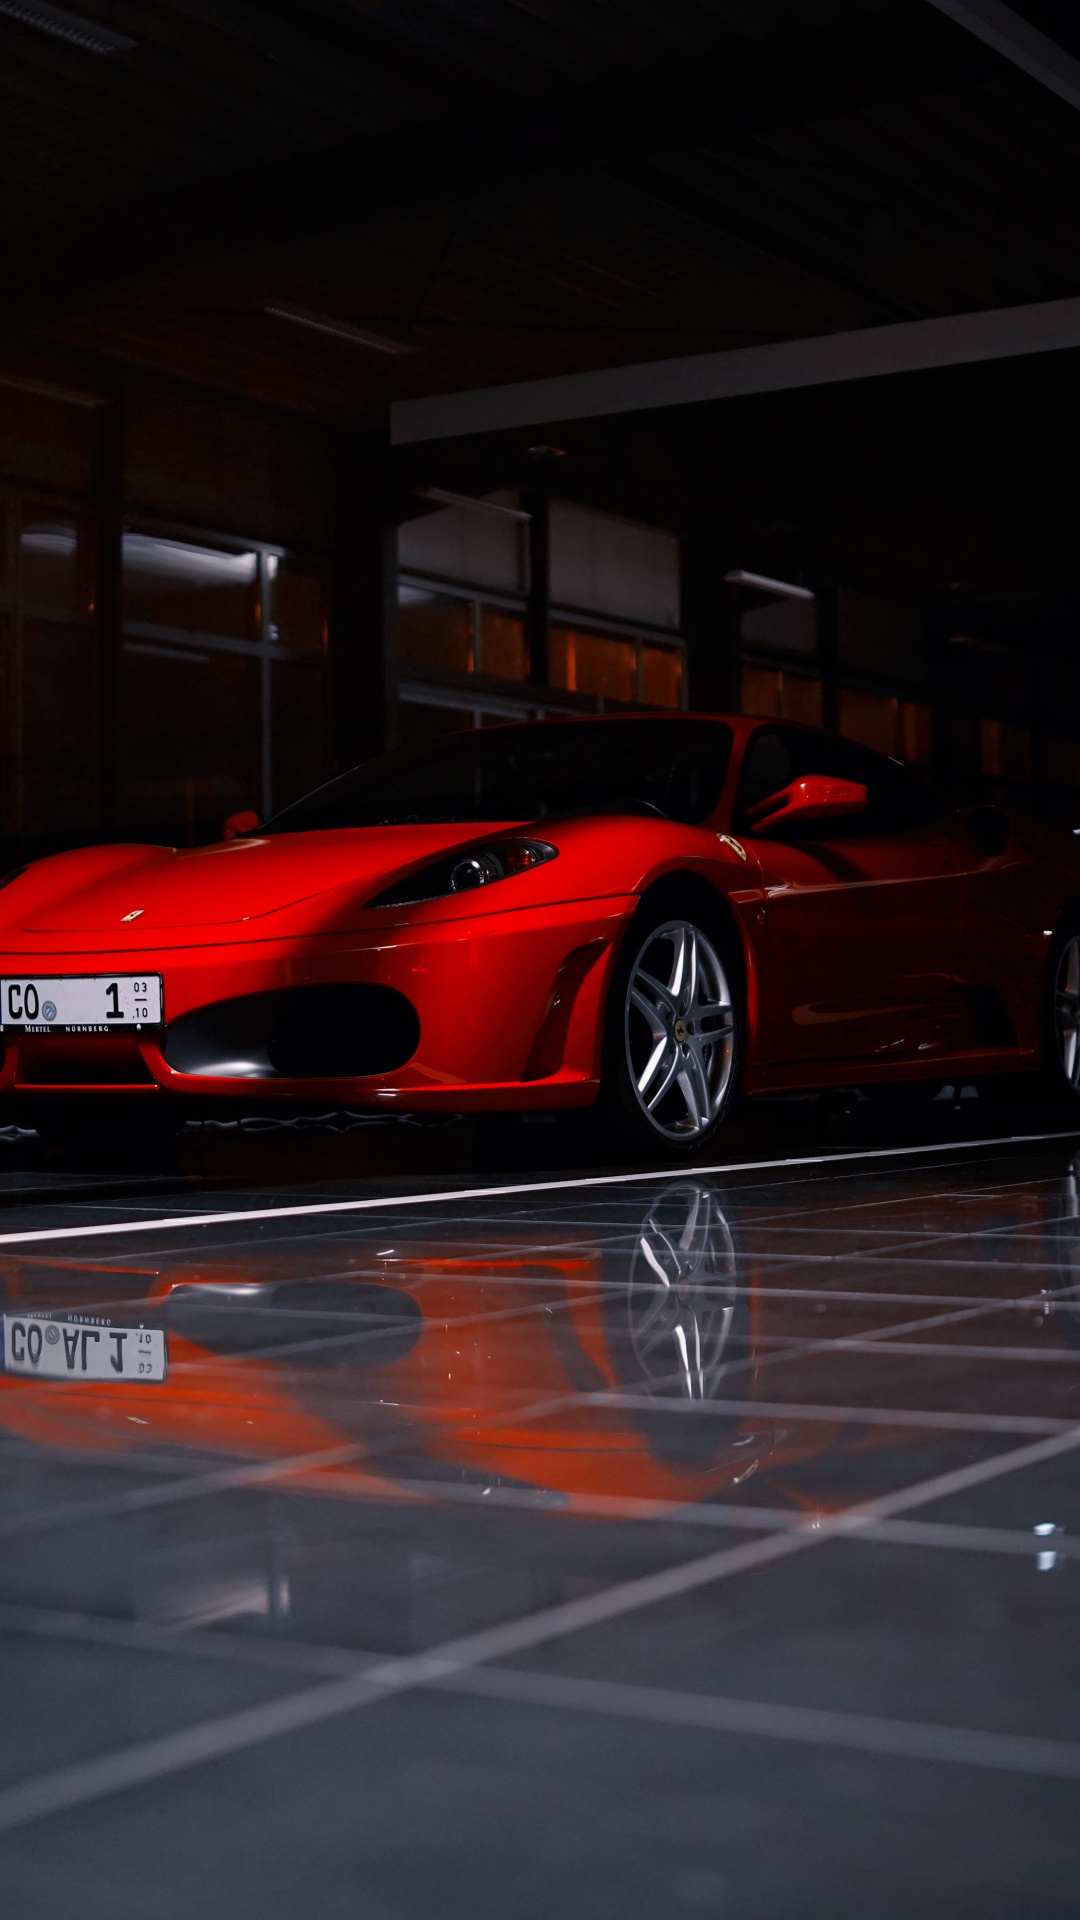 Red Ferrari 458 Italia Parked on Parking Lot. Wallpaper in 1080x1920 Resolution